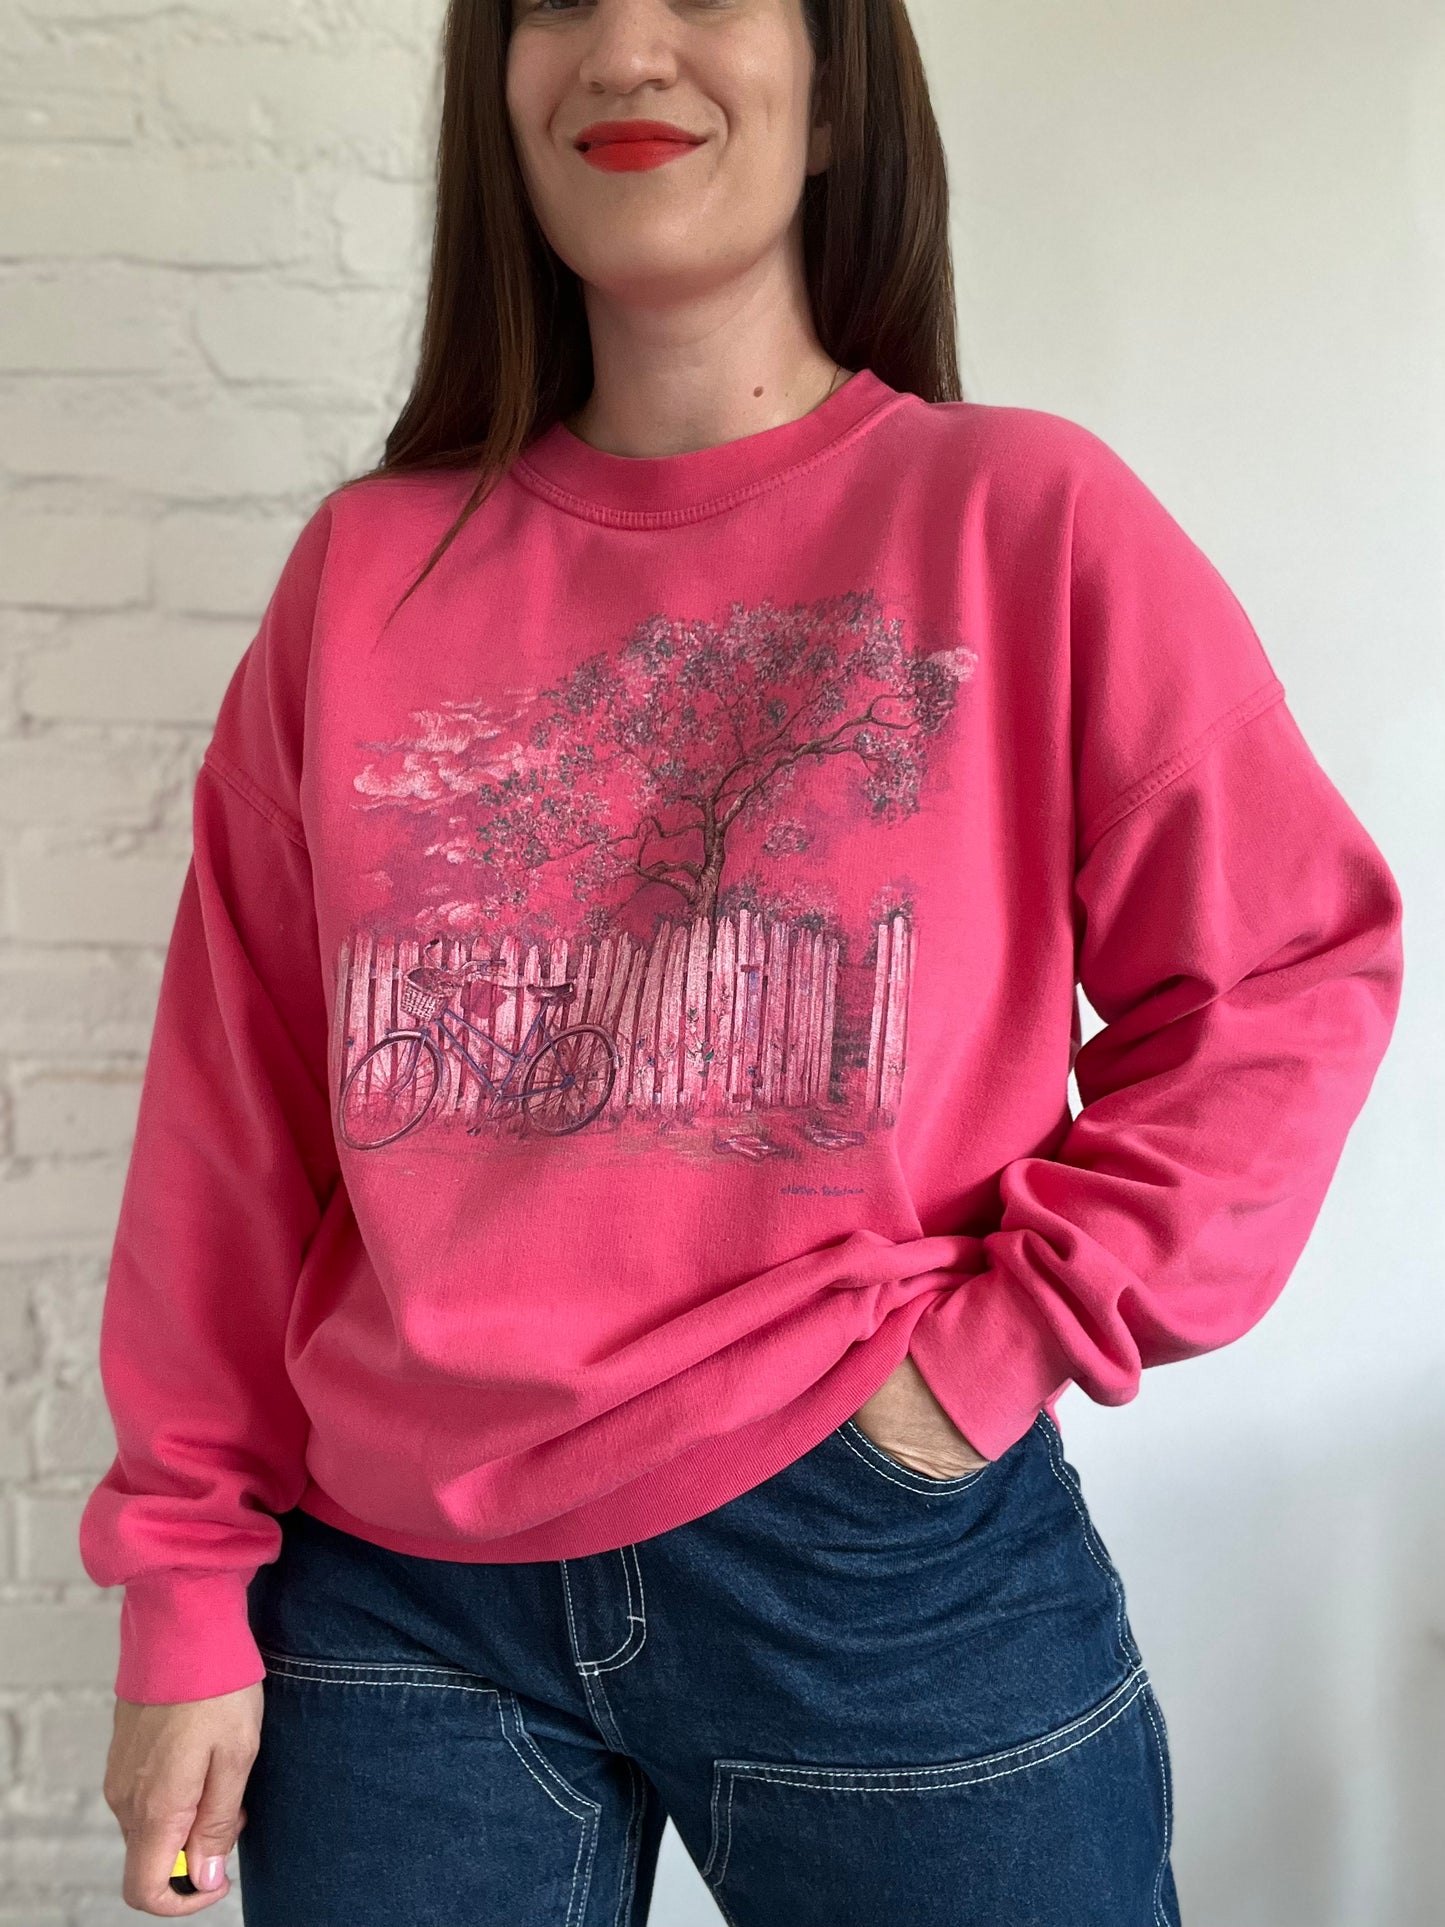 Northern Reflections Pink Bike Sweater - XL